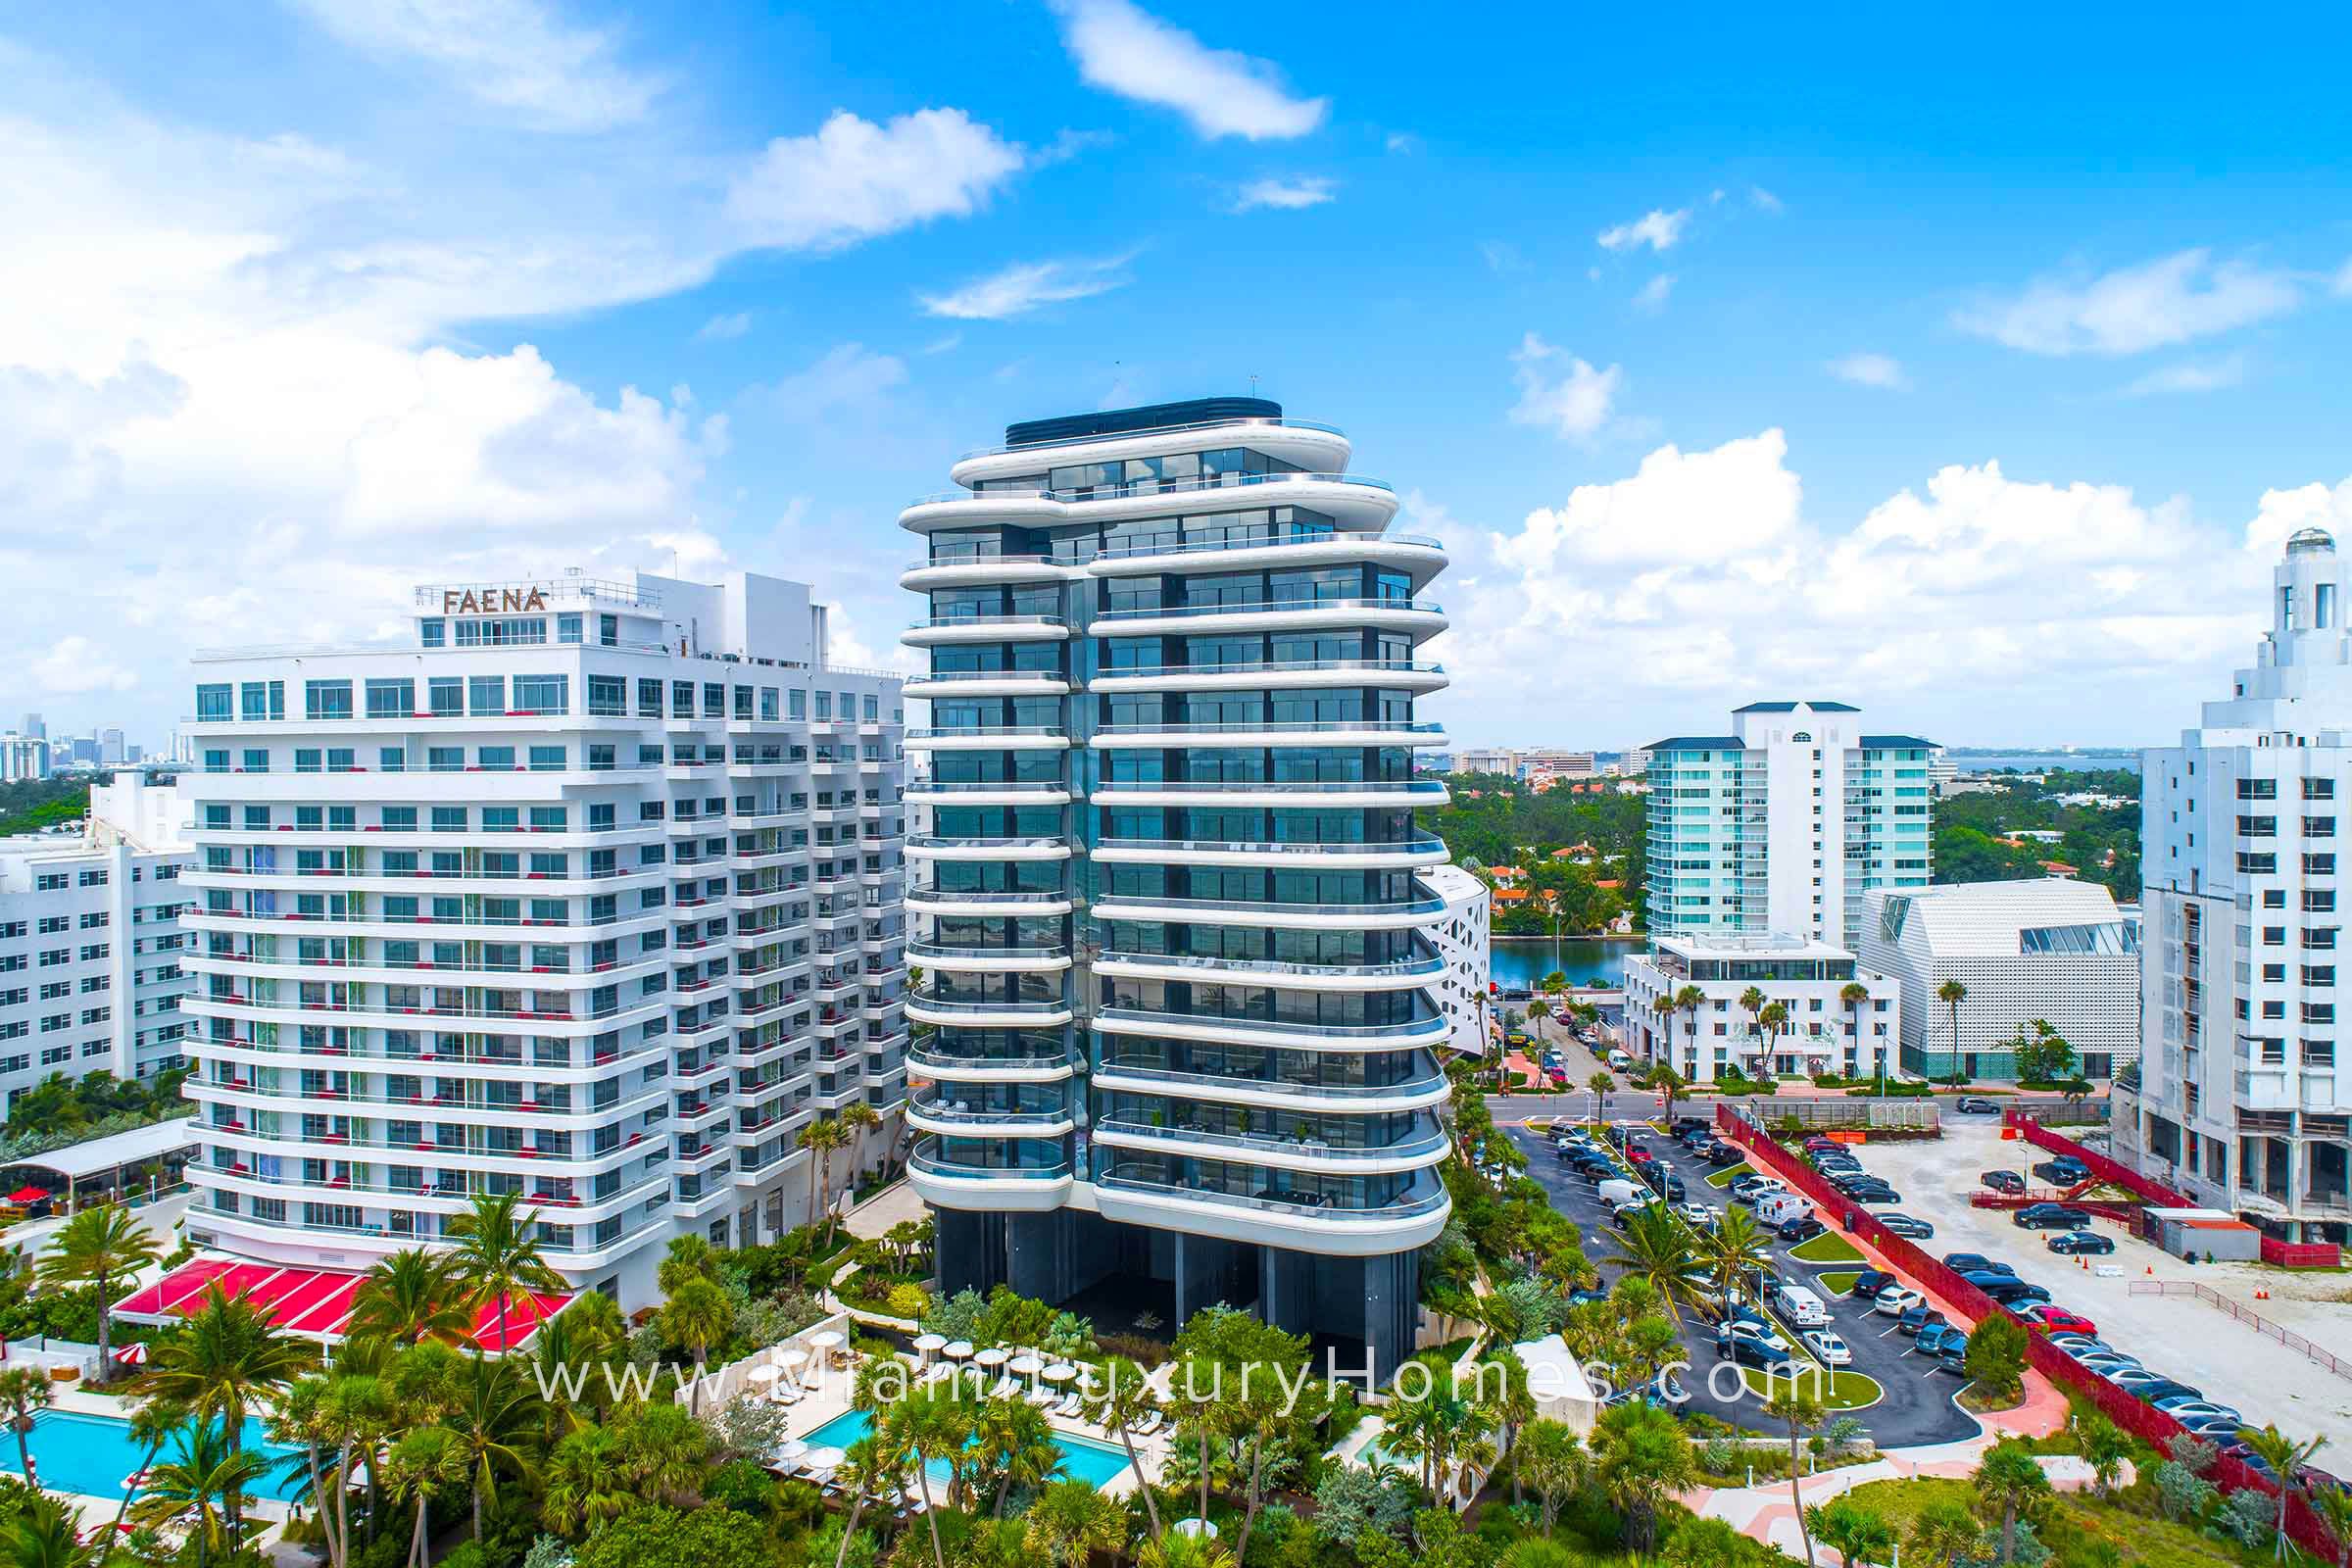 Faena House Condos in Miami Beach